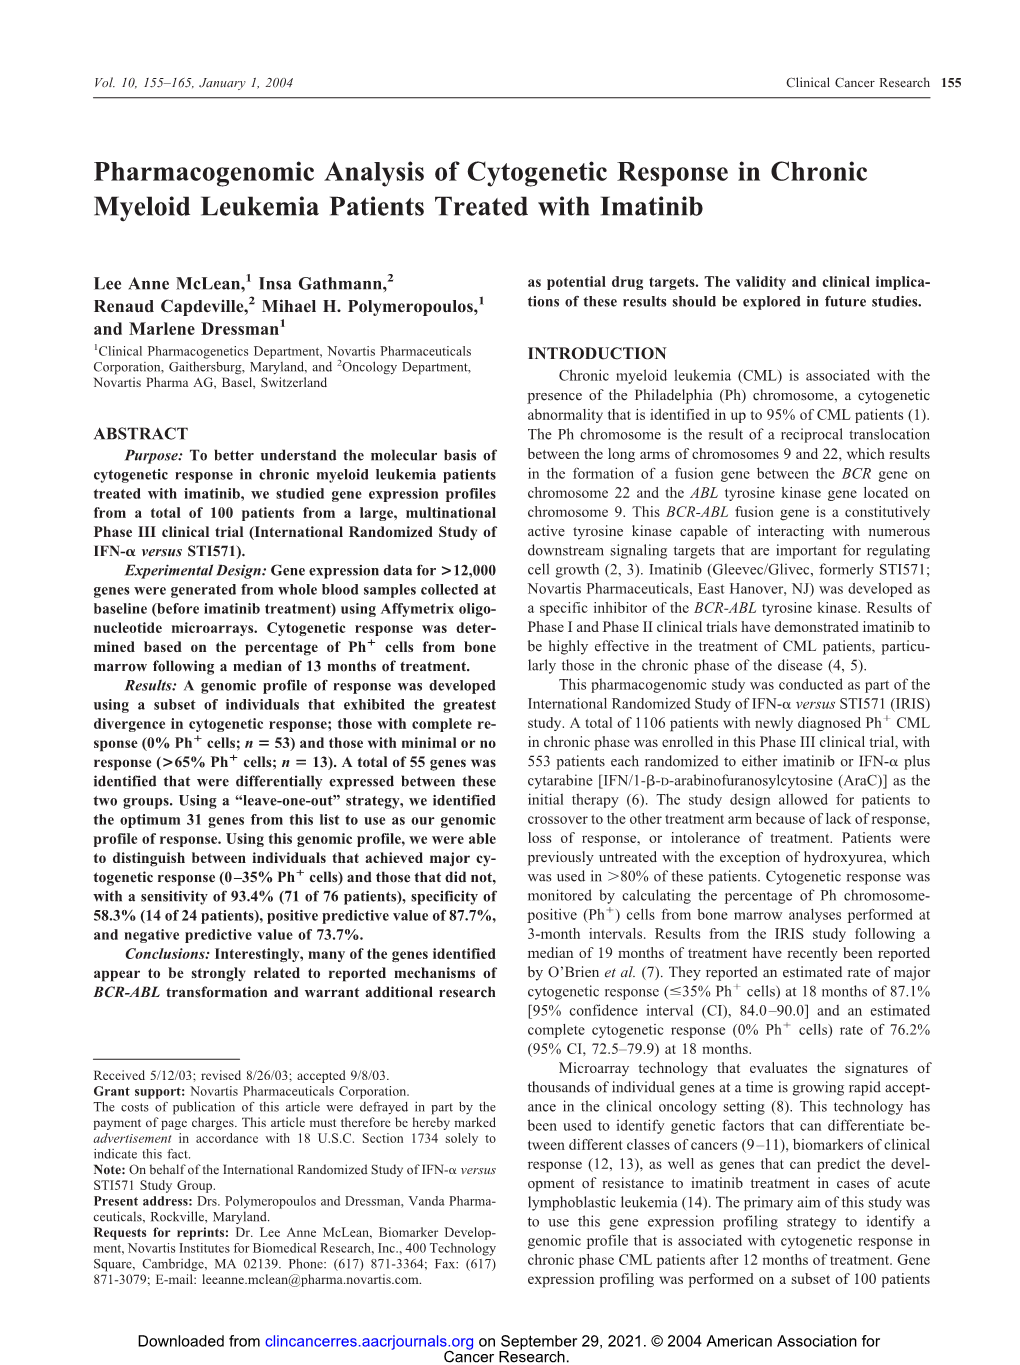 Pharmacogenomic Analysis of Cytogenetic Response in Chronic Myeloid Leukemia Patients Treated with Imatinib